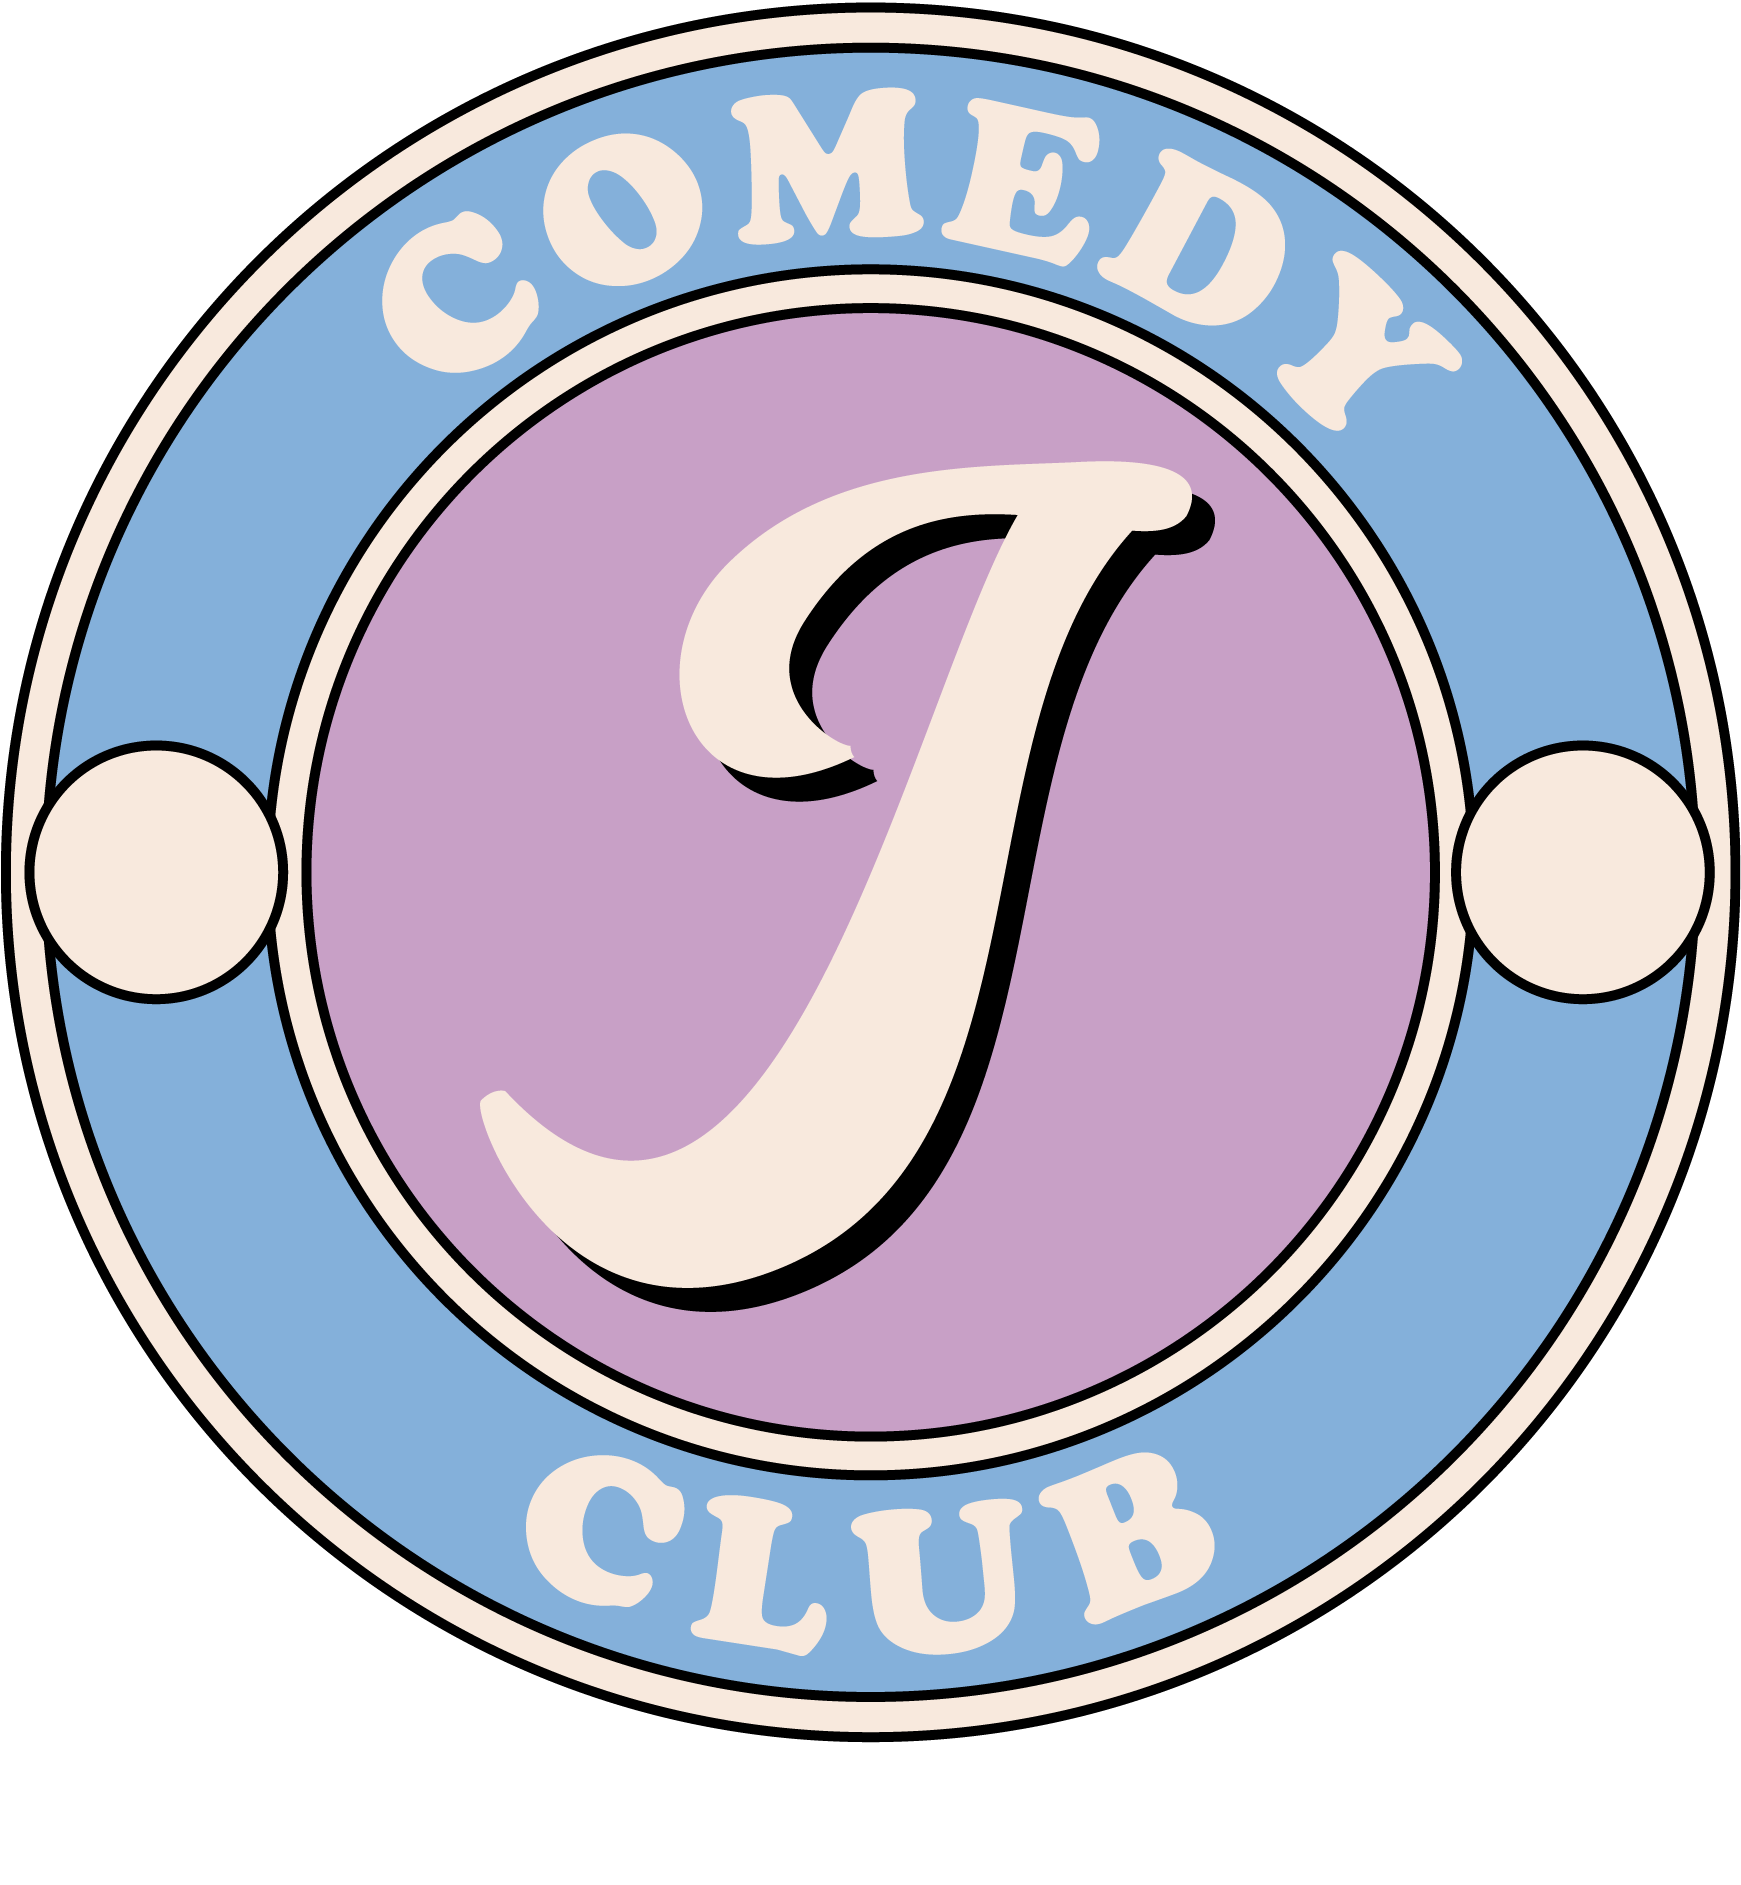 Joey's Comedy Club